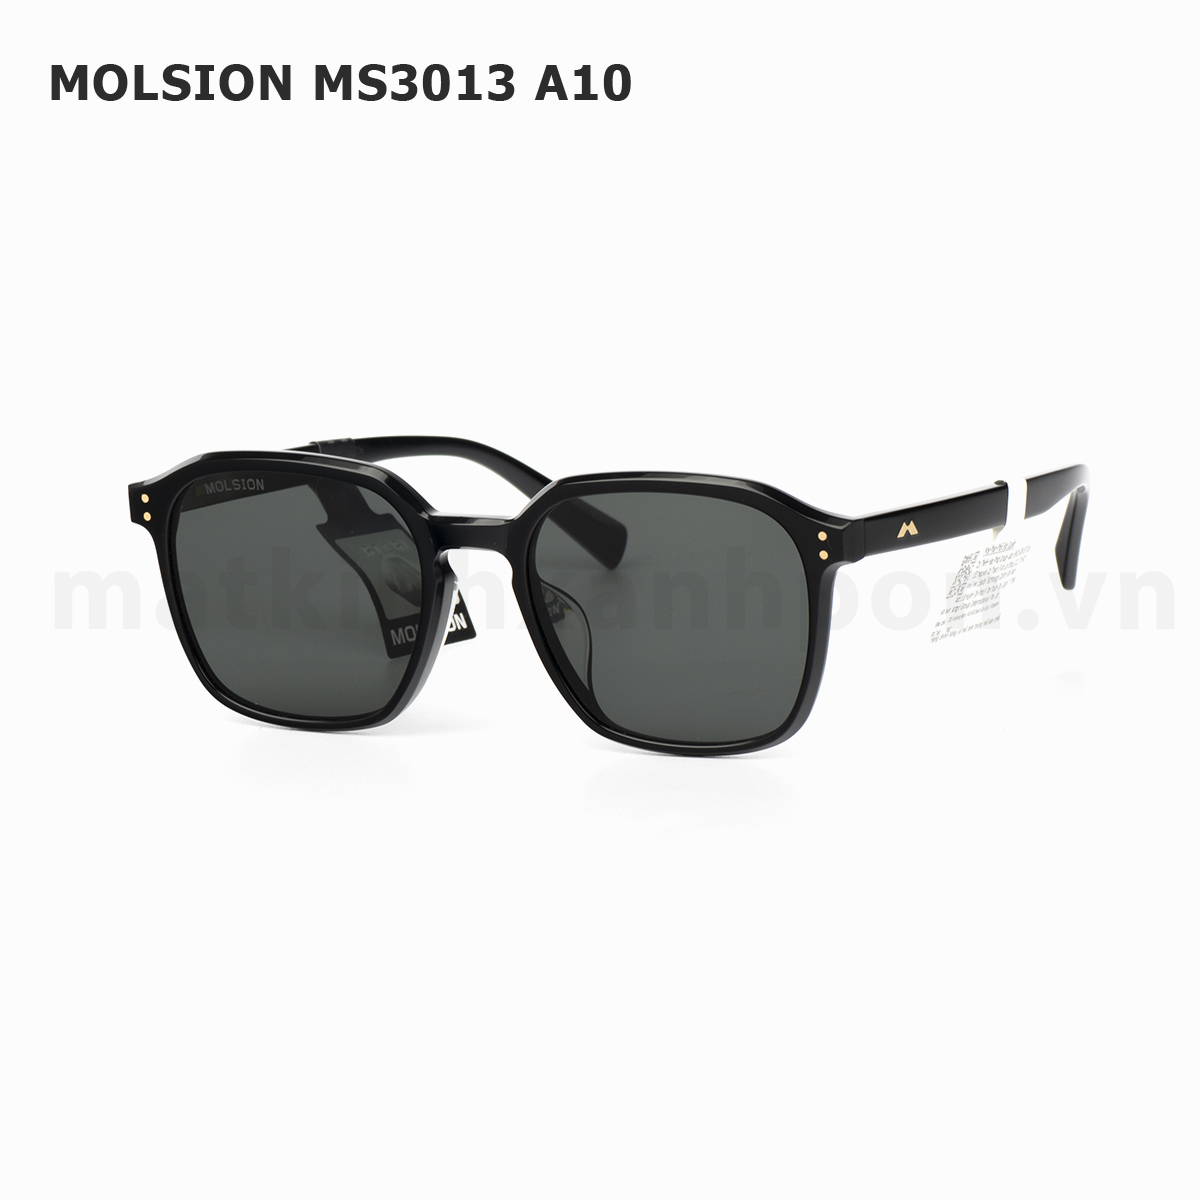 Molsion MS3013 A10